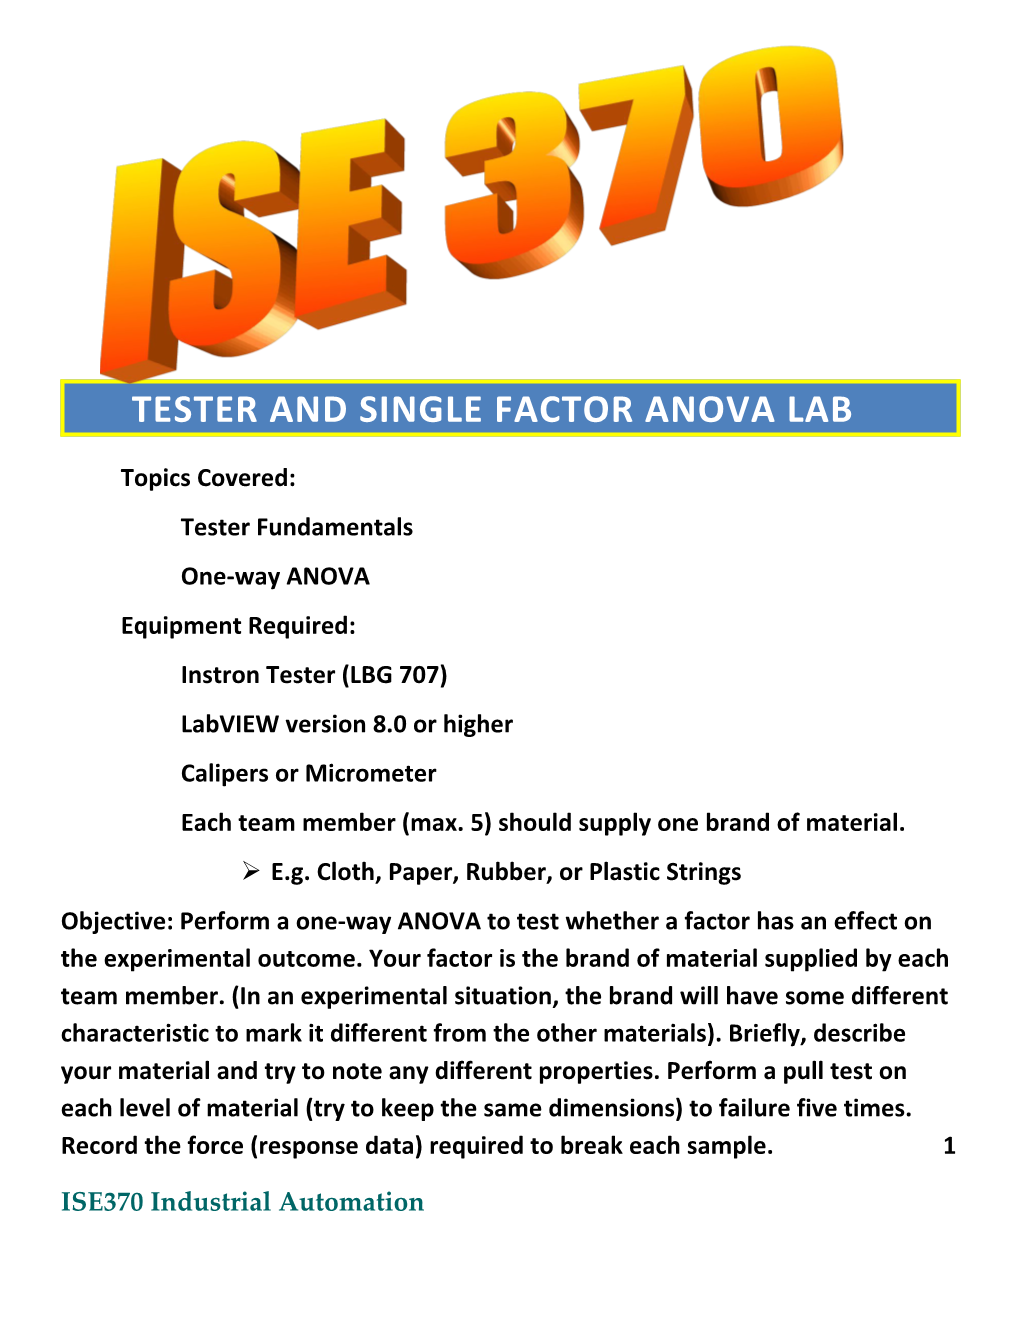 Tester and Single Factor ANOVA Lab